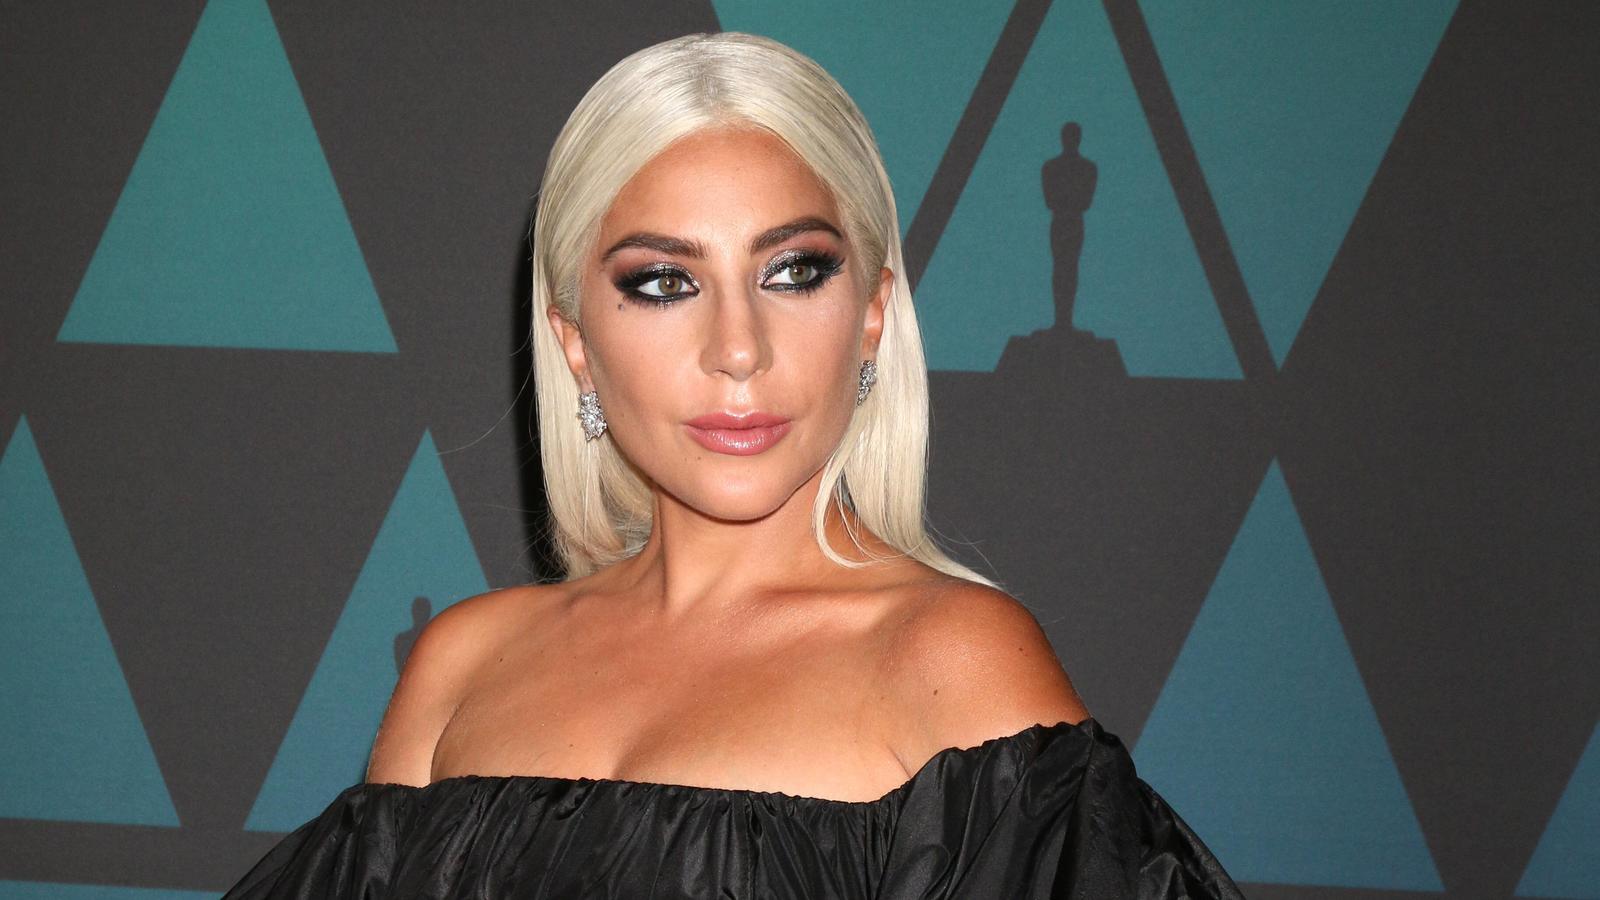 LOS ANGELES - NOV 18: Lady Gaga at the 10th Annual Governors Awards at the Ray Dolby Ballroom on November 18, 2018 in Los Angeles, CA PUBLICATIONxINxGERxSUIxAUTxONLY Copyright: xHutchinsxPhotox/xIPAx/xHutchinsxPhotox  